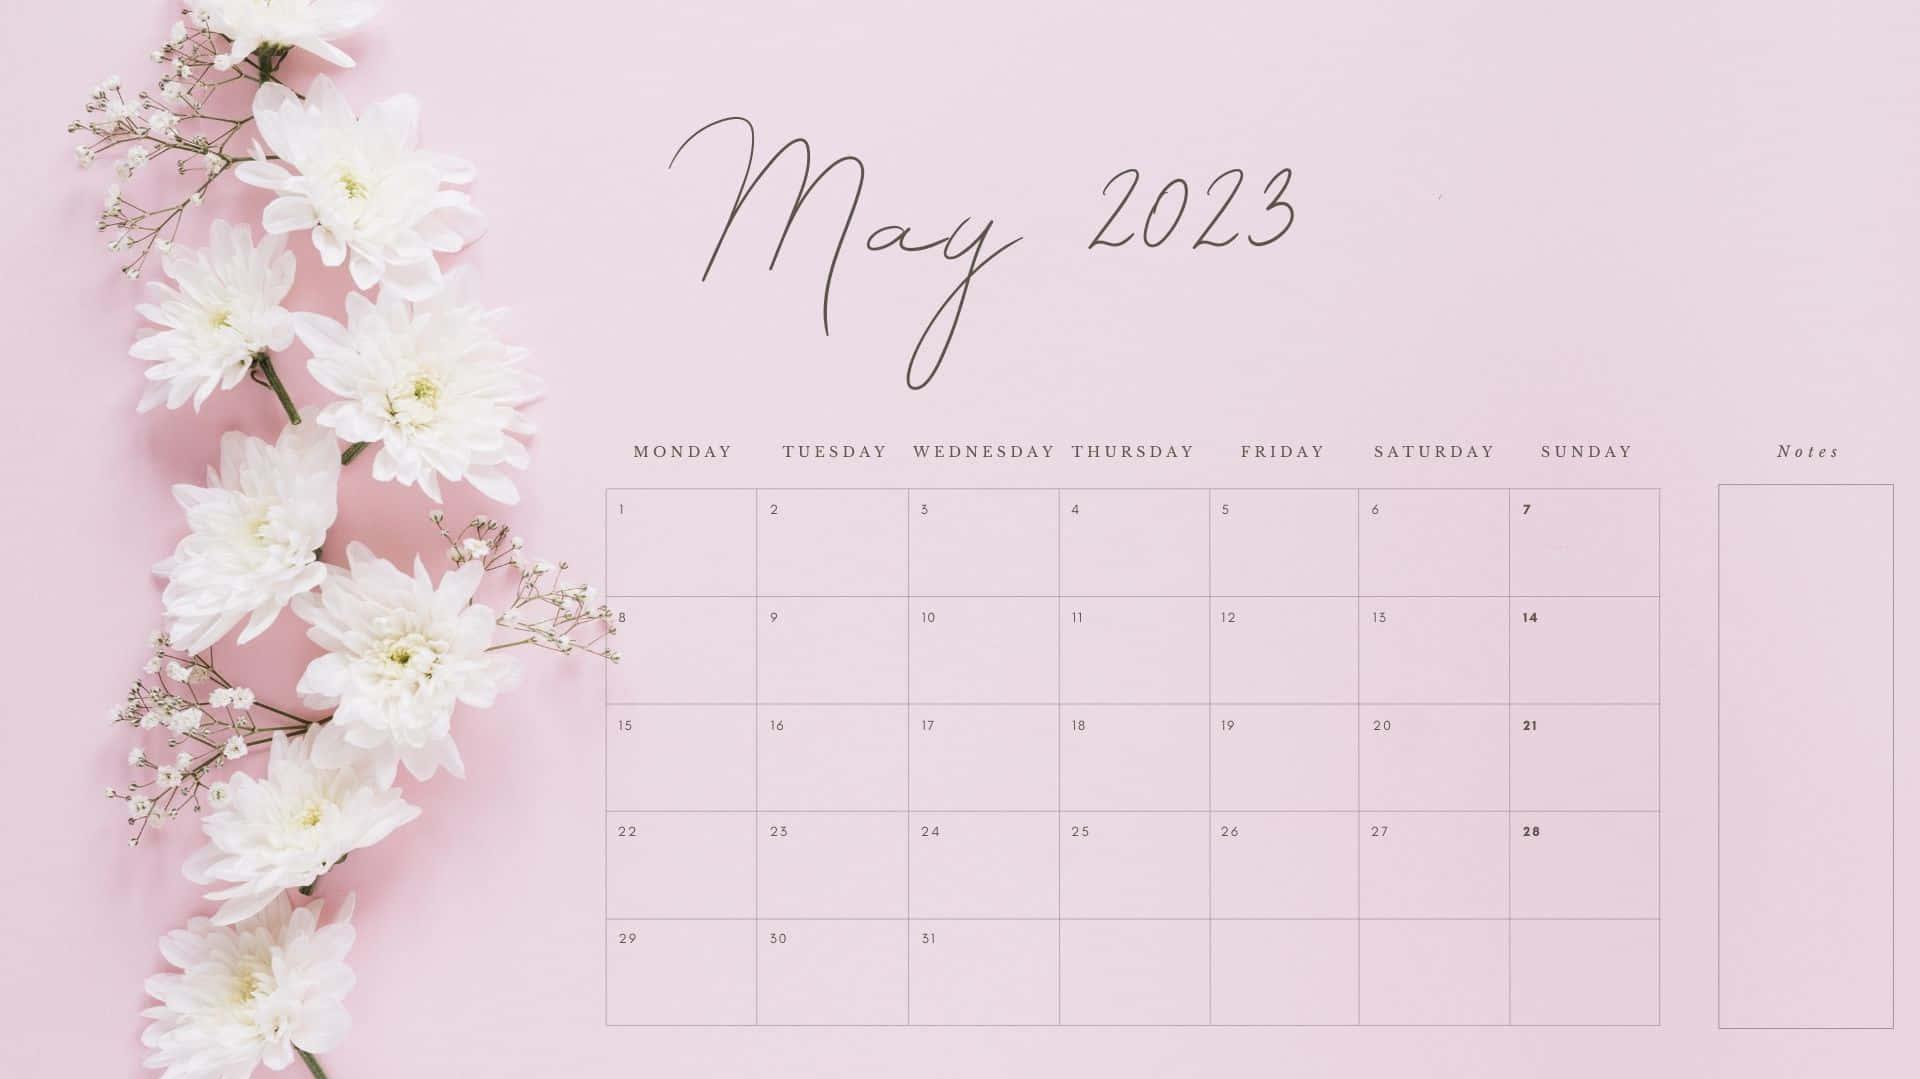 Free May 2023 Calendar Wallpaper Downloads [100] May 2023